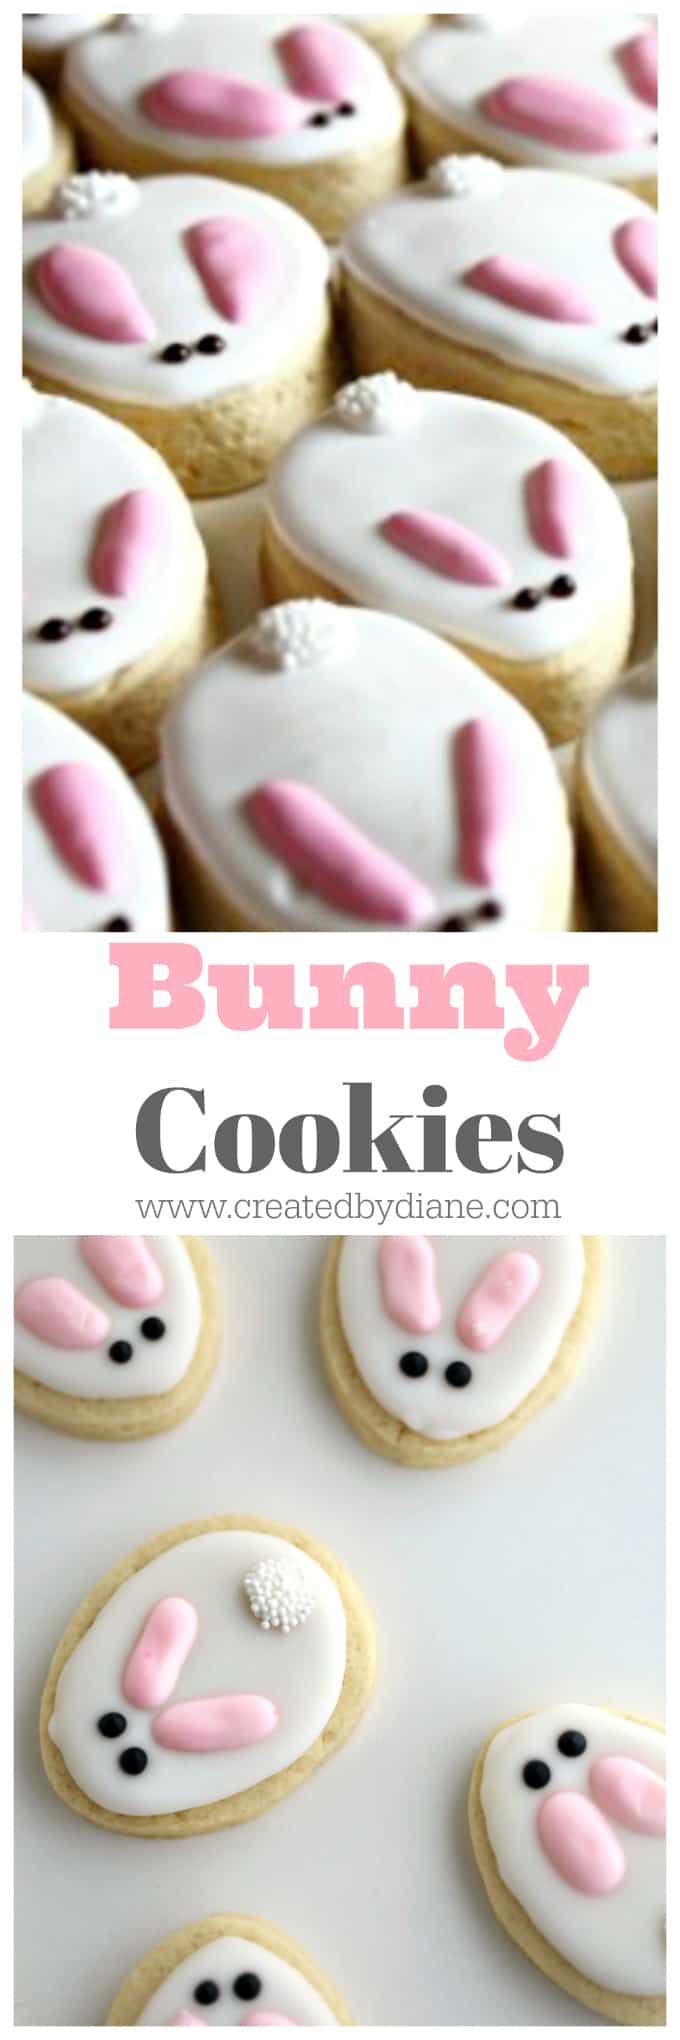 cookies decorated as bunnies easter www.createdbydiane.com